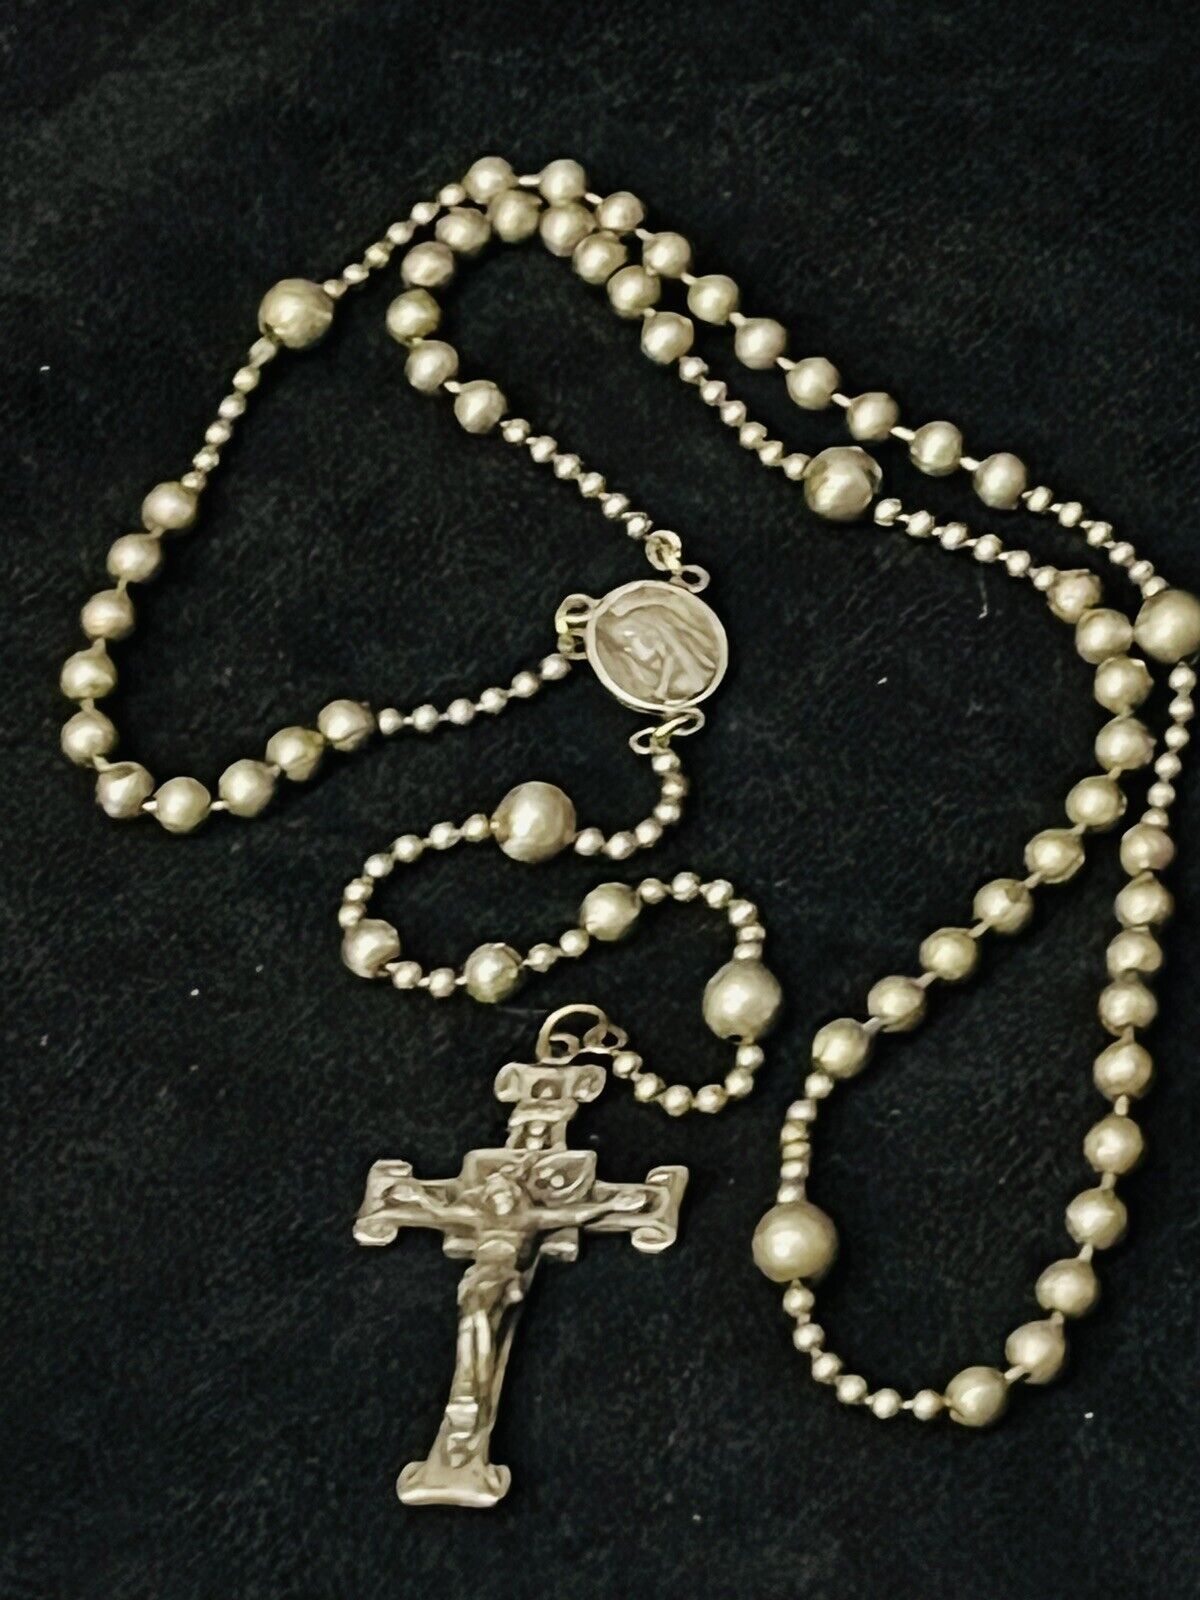 Antique/Vintage WW2 Military Rosary Ball Chain Religious Crucifix Catholic